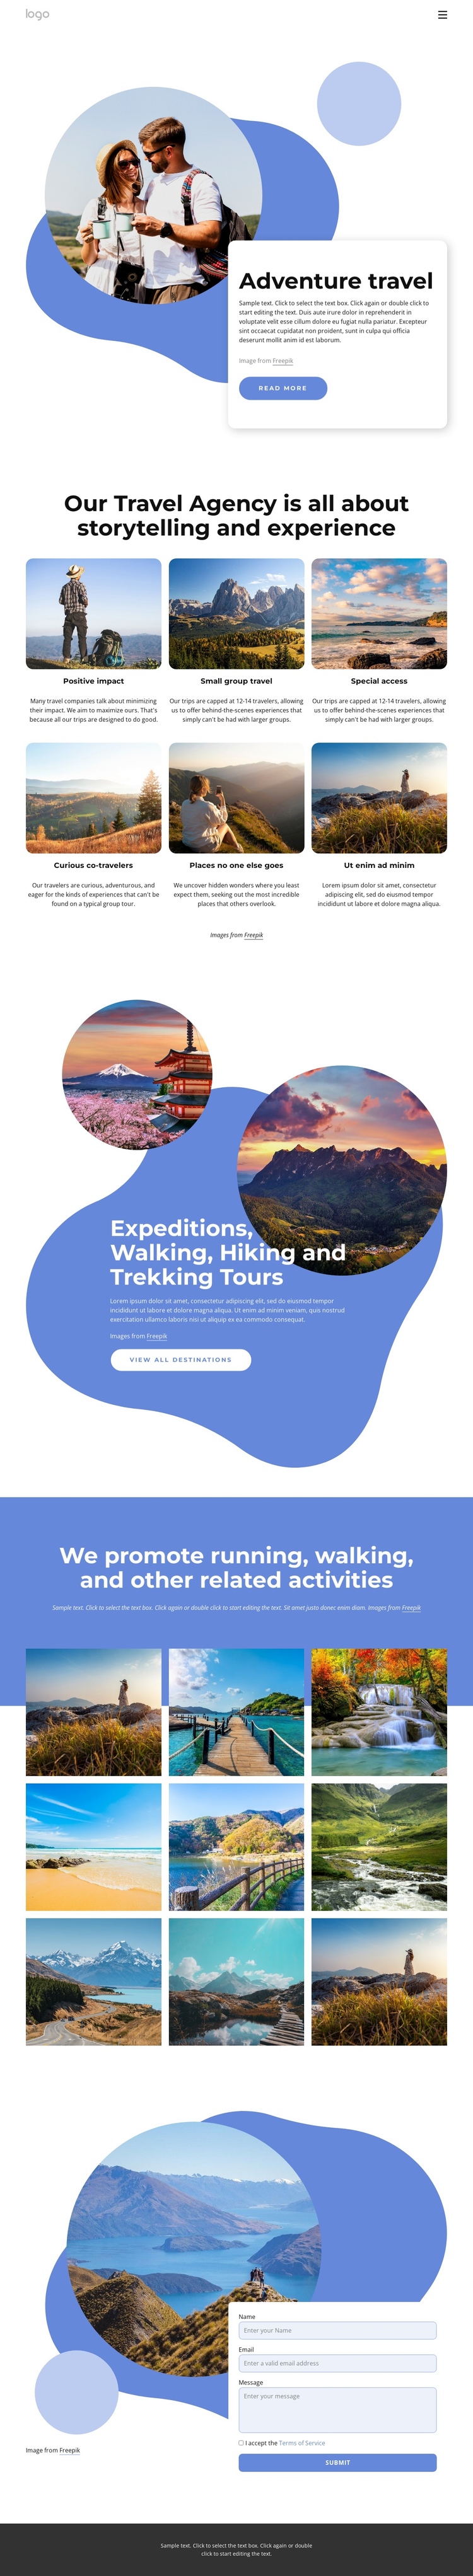 Agency specializing in luxury adventure travel Website Builder Software